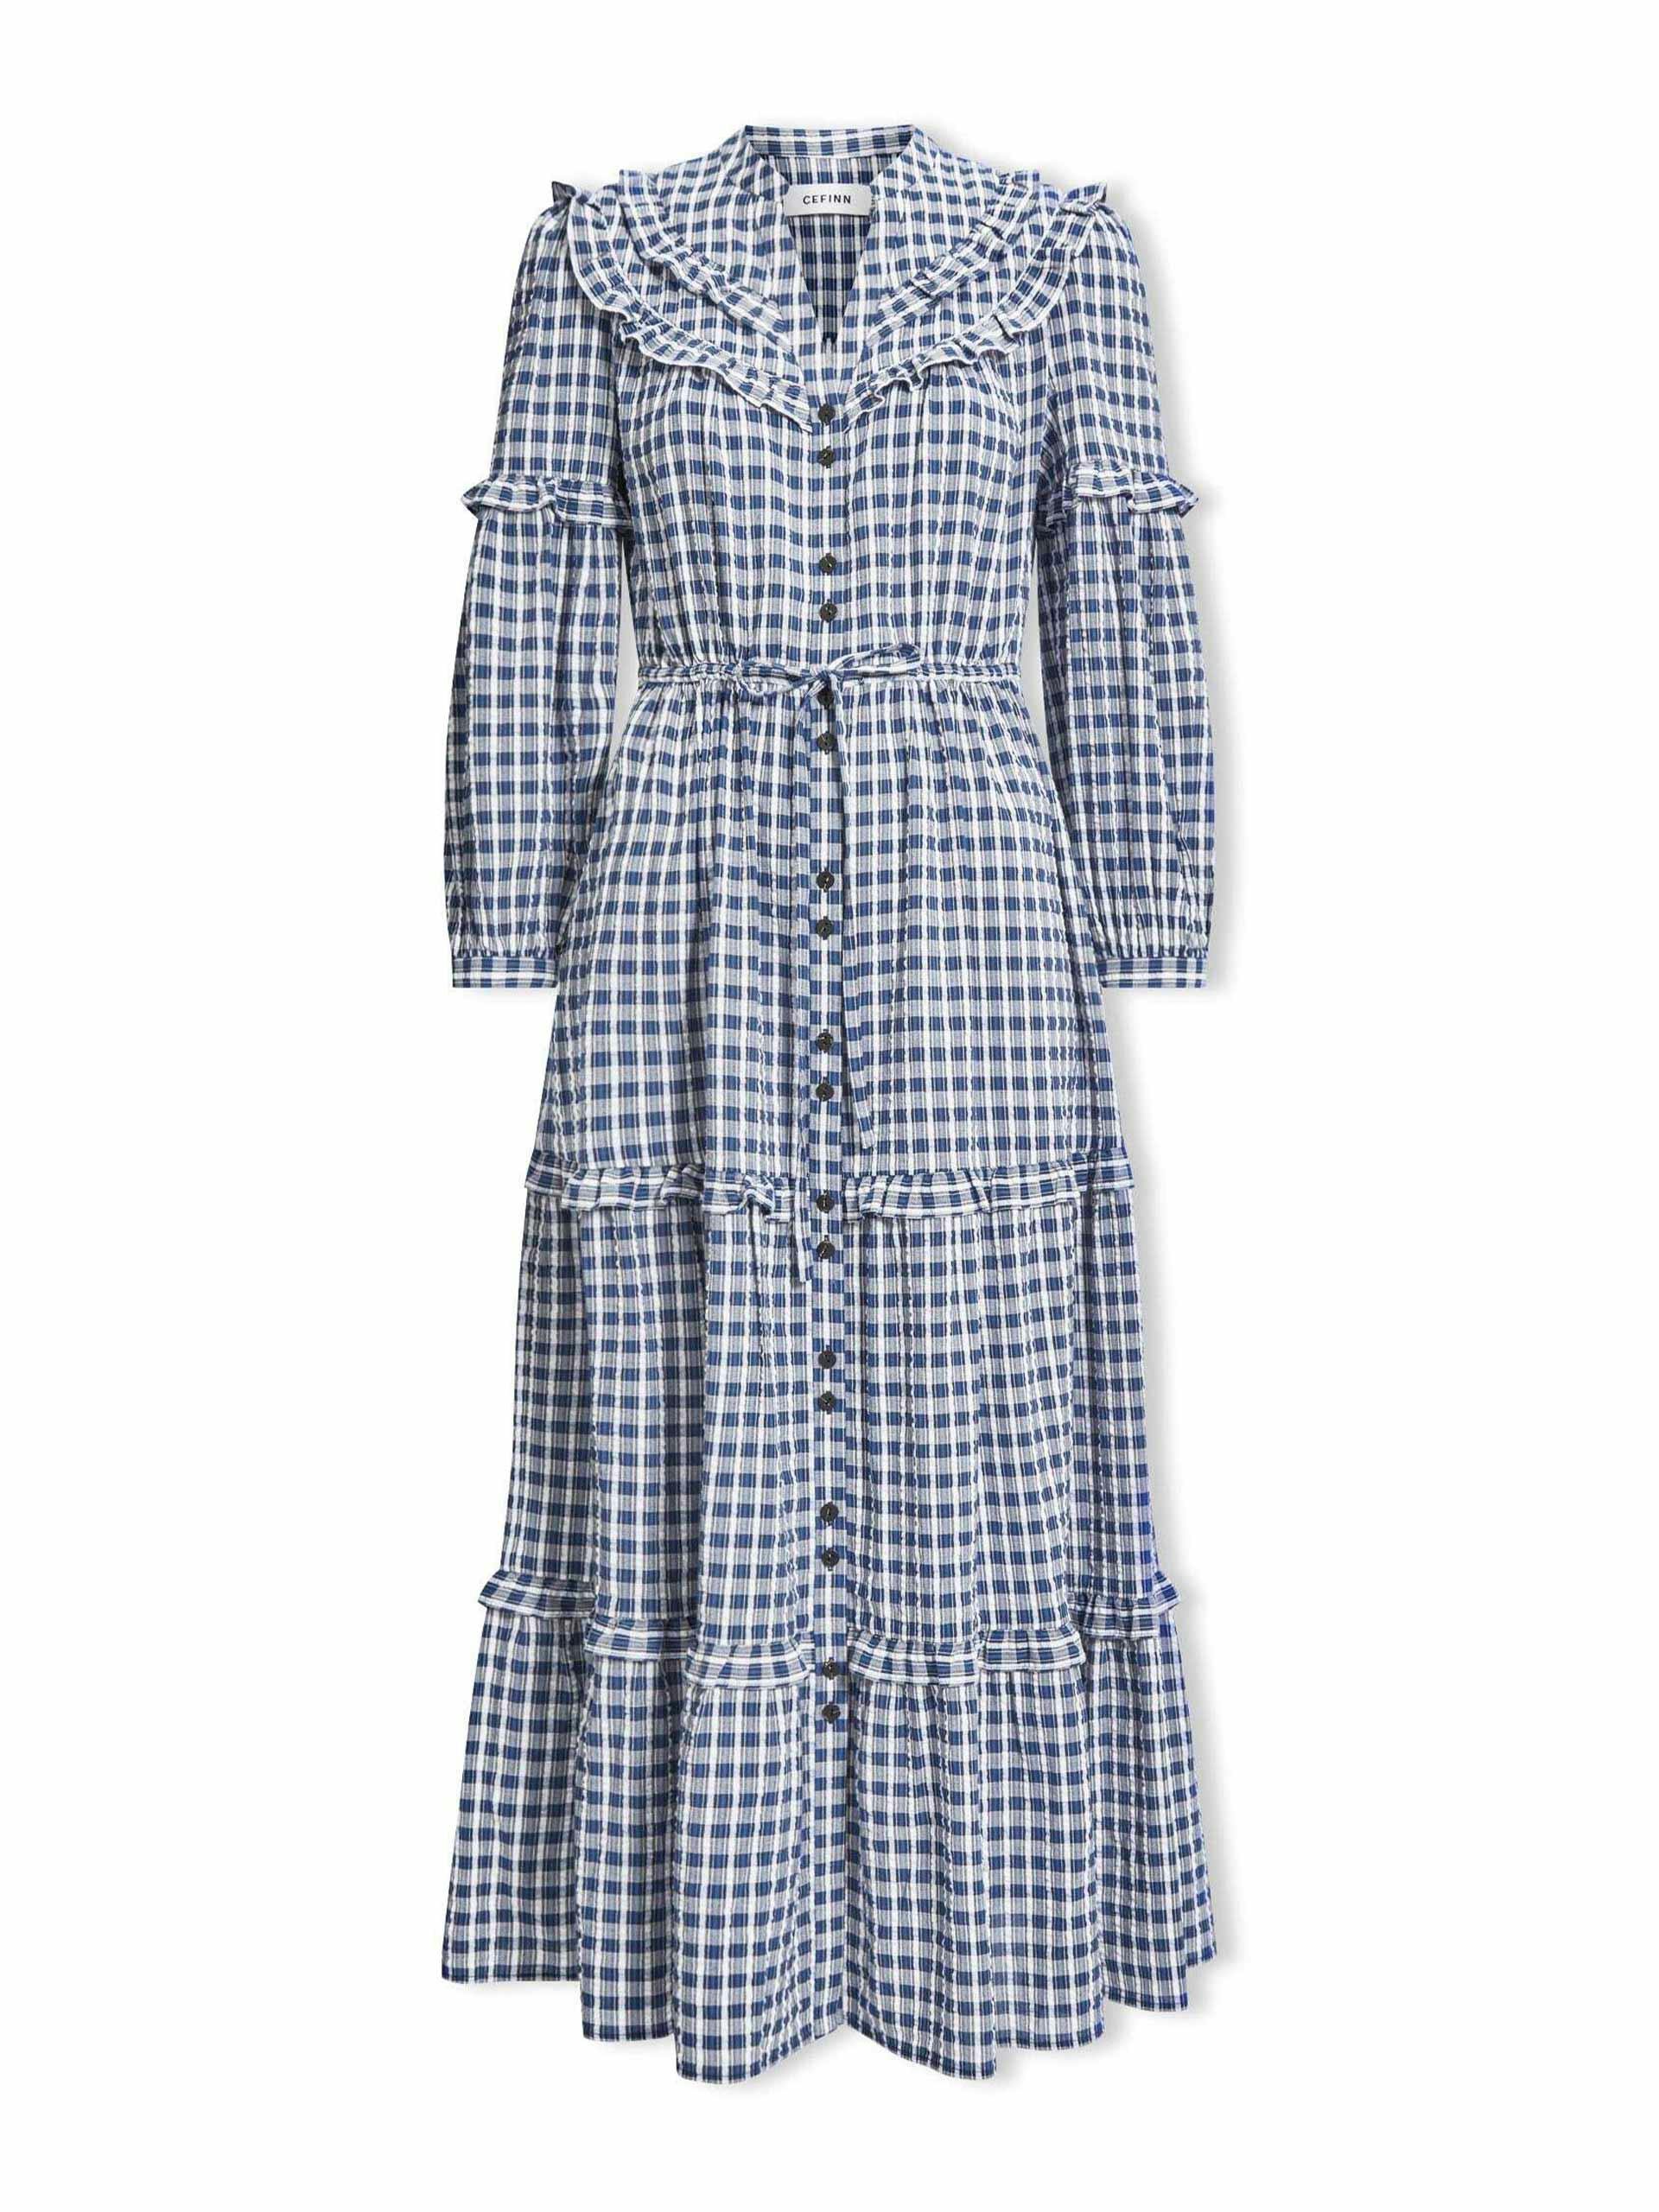 Suki organic cotton seersucker maxi dress, in blue and white check